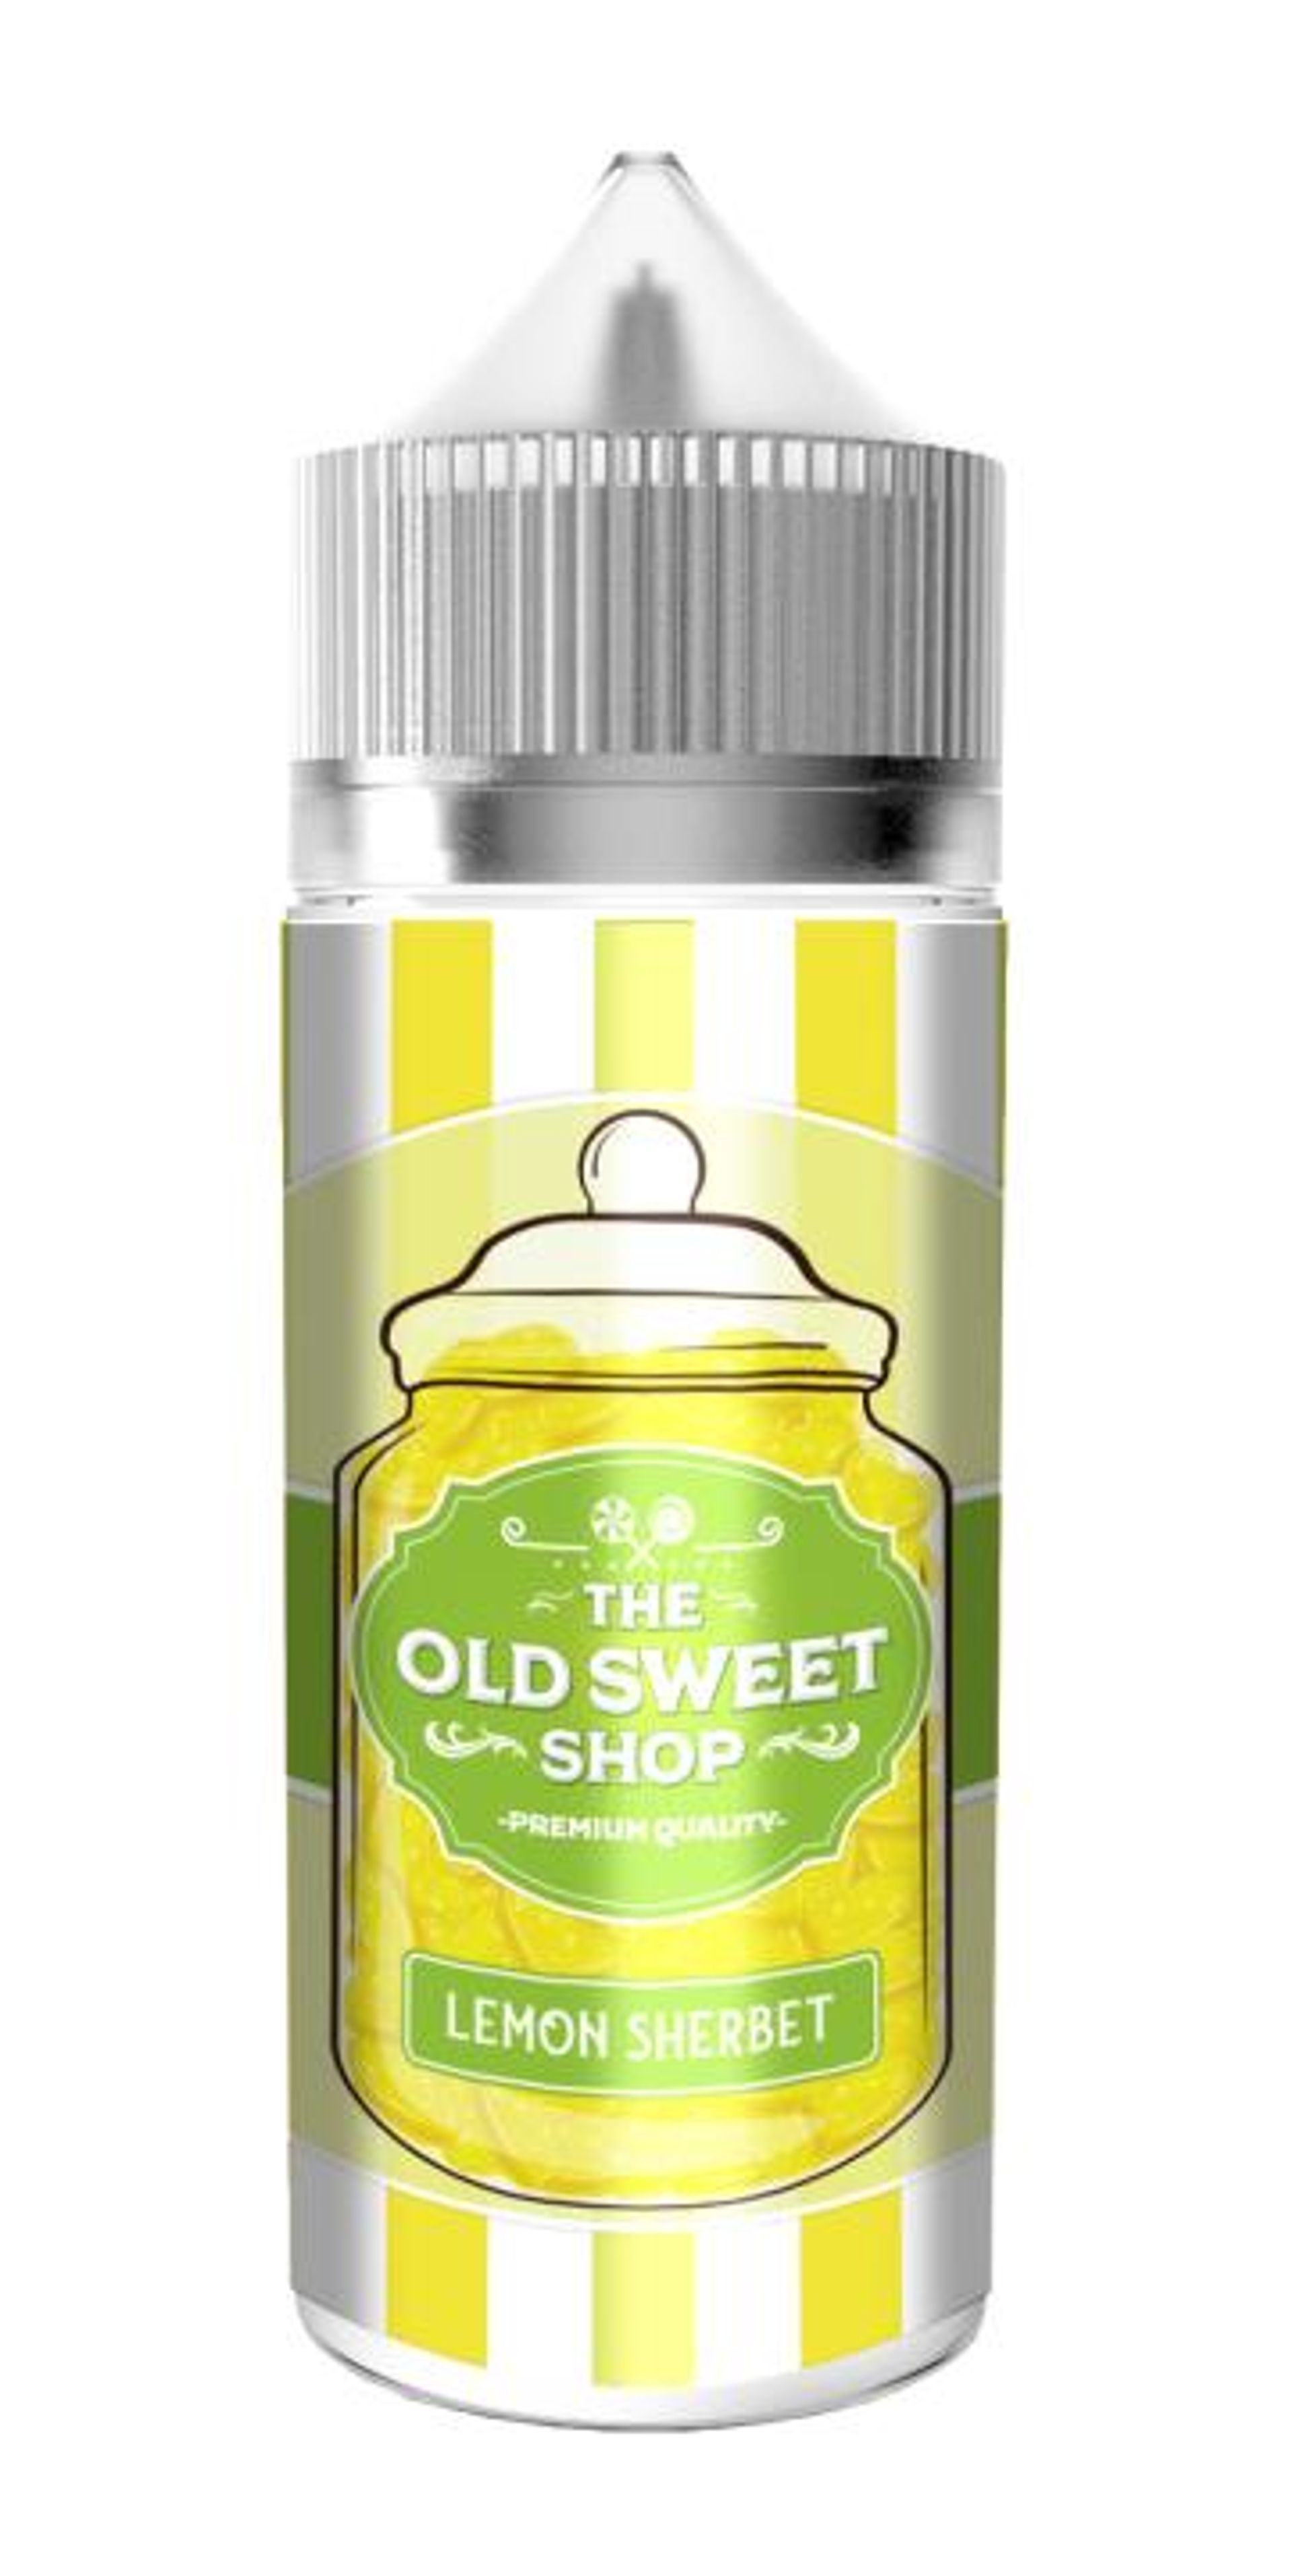 Image of Lemon Sherbet by The Old Sweet Shop